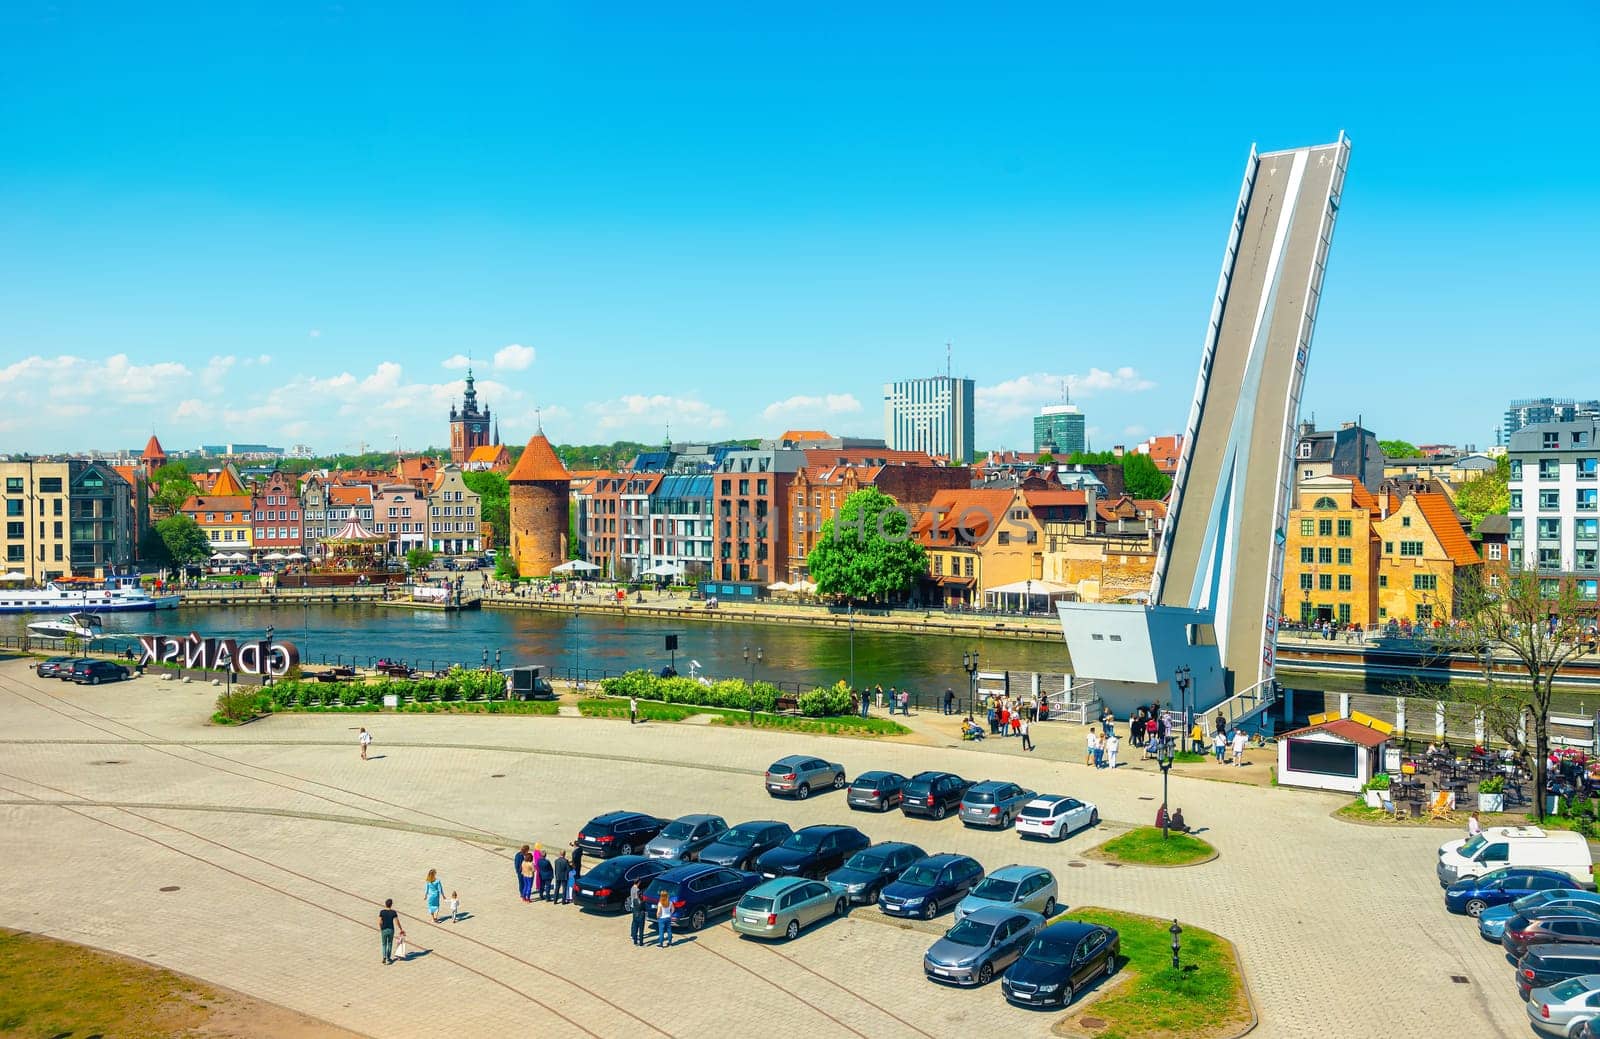 Pedestrian bridge in Gdansk by Givaga